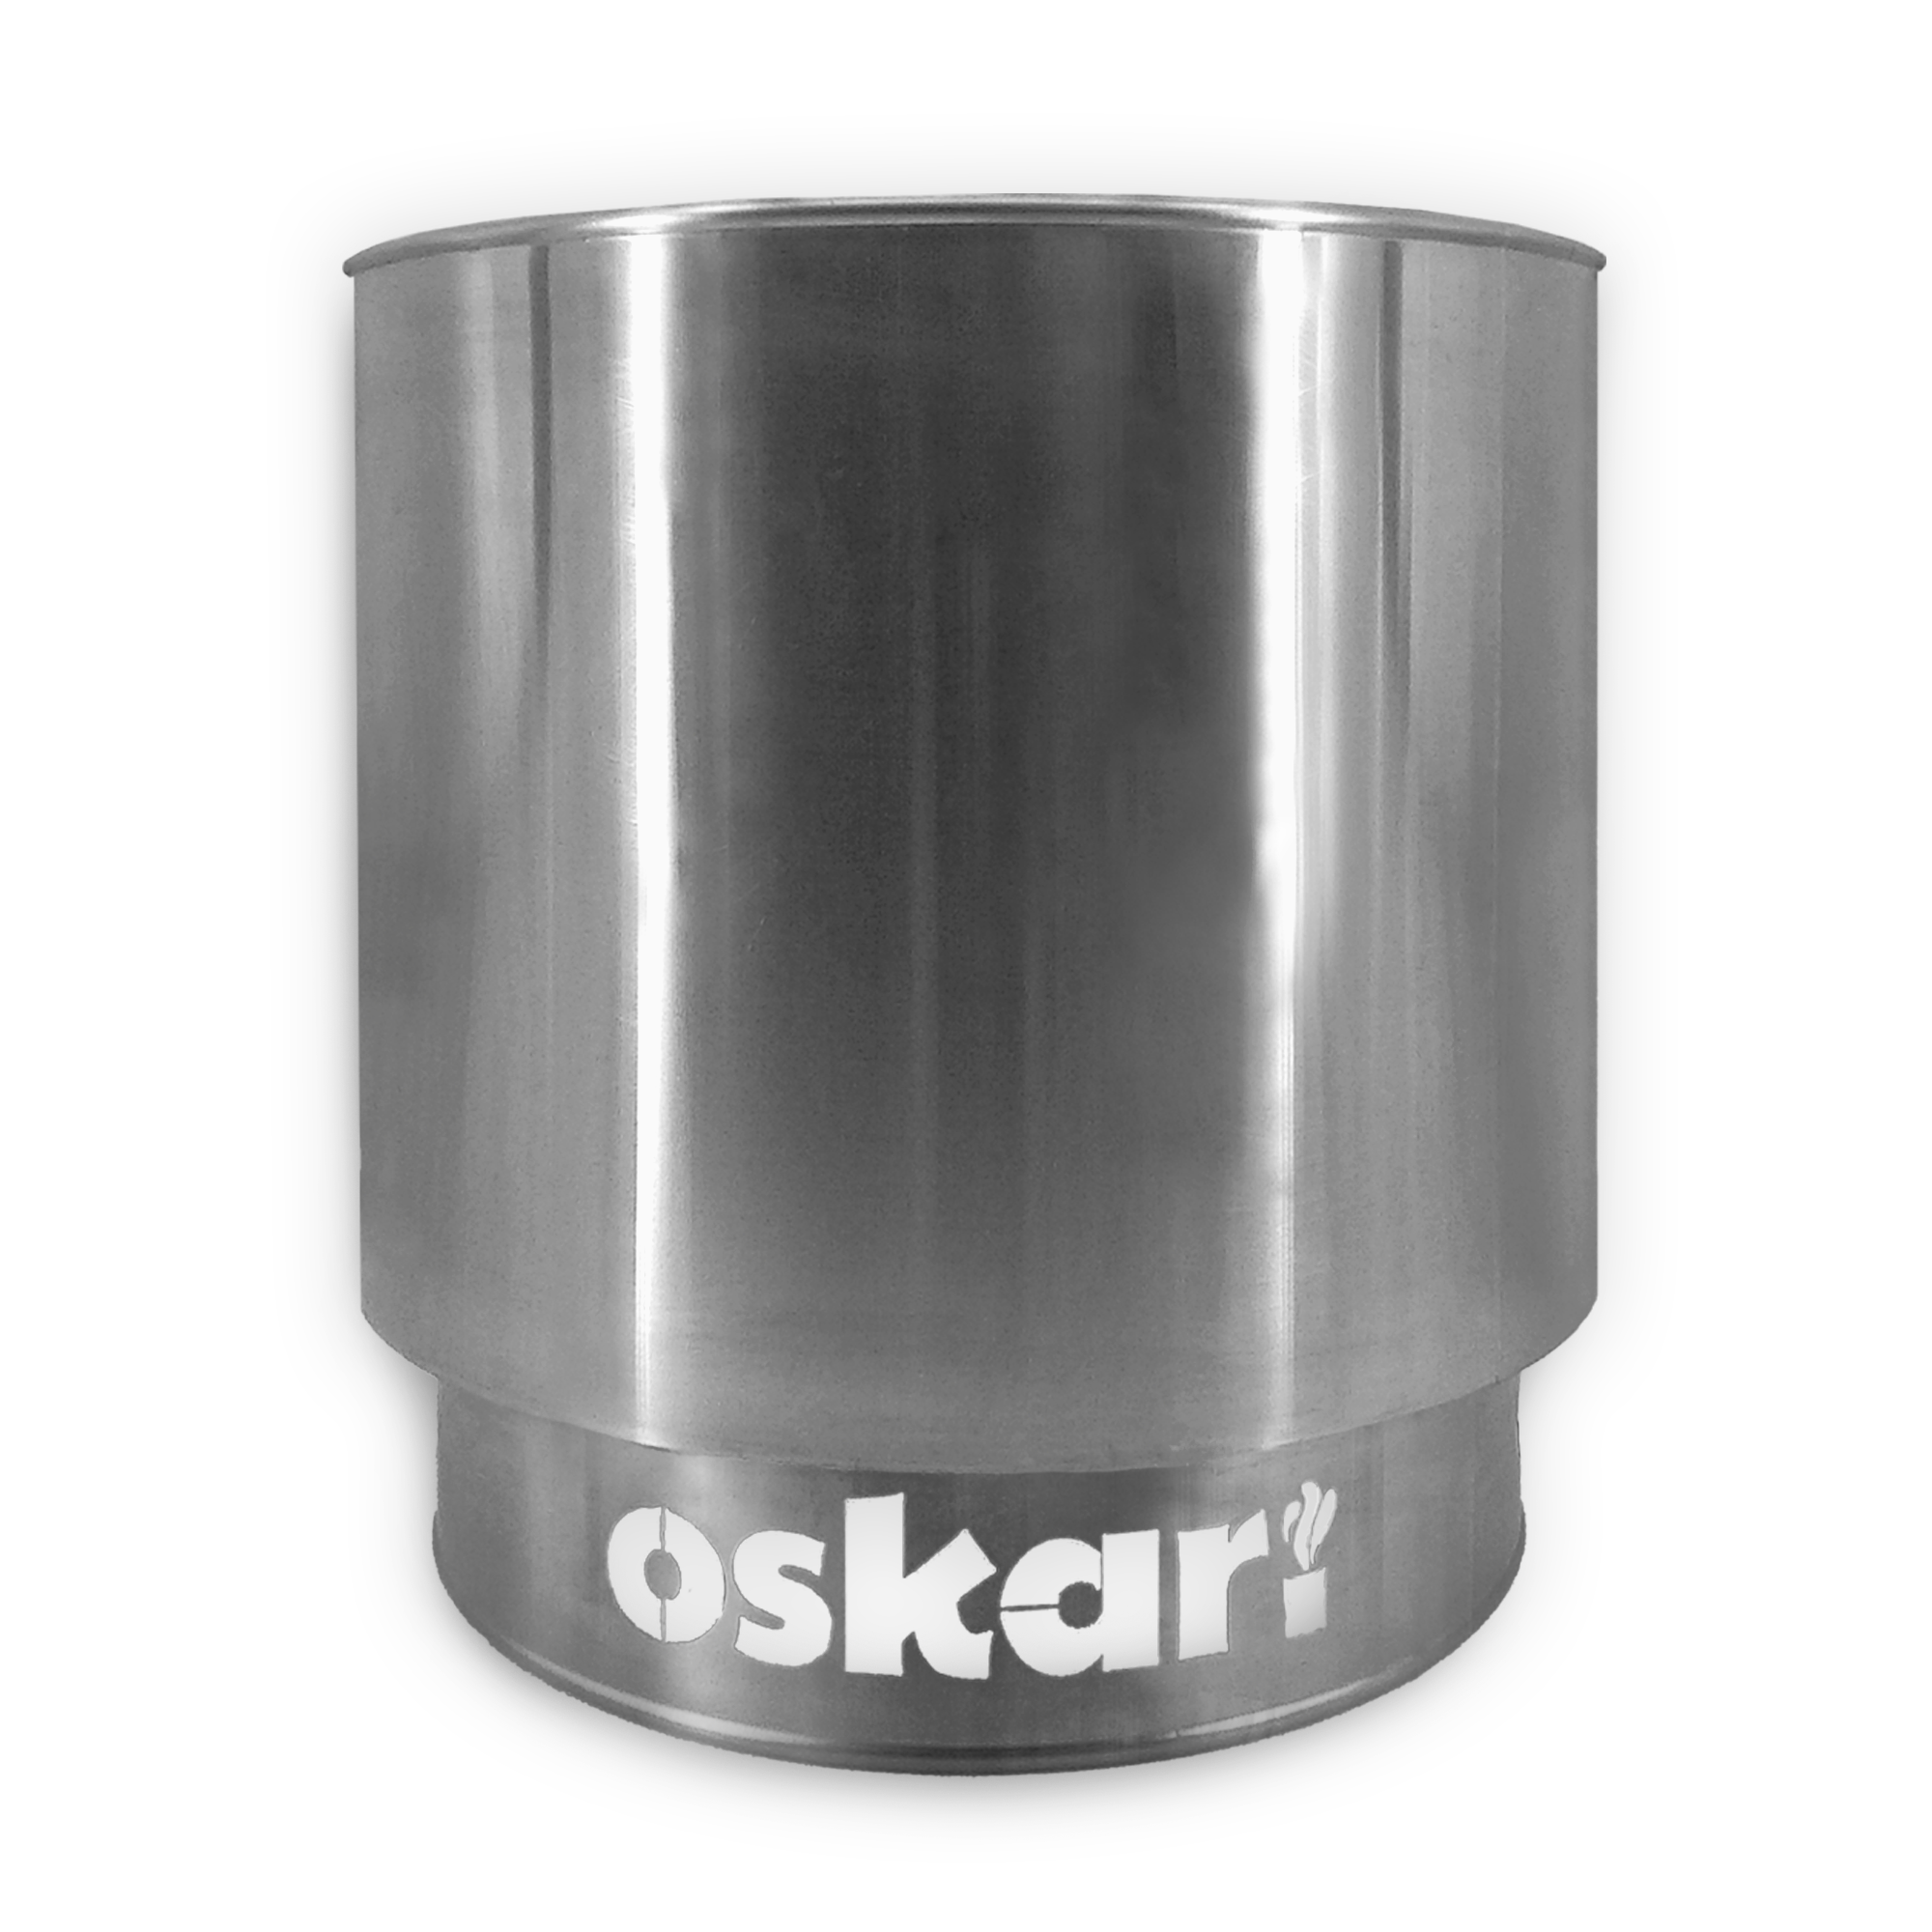 Oskars eldkorg i rostfritt stål